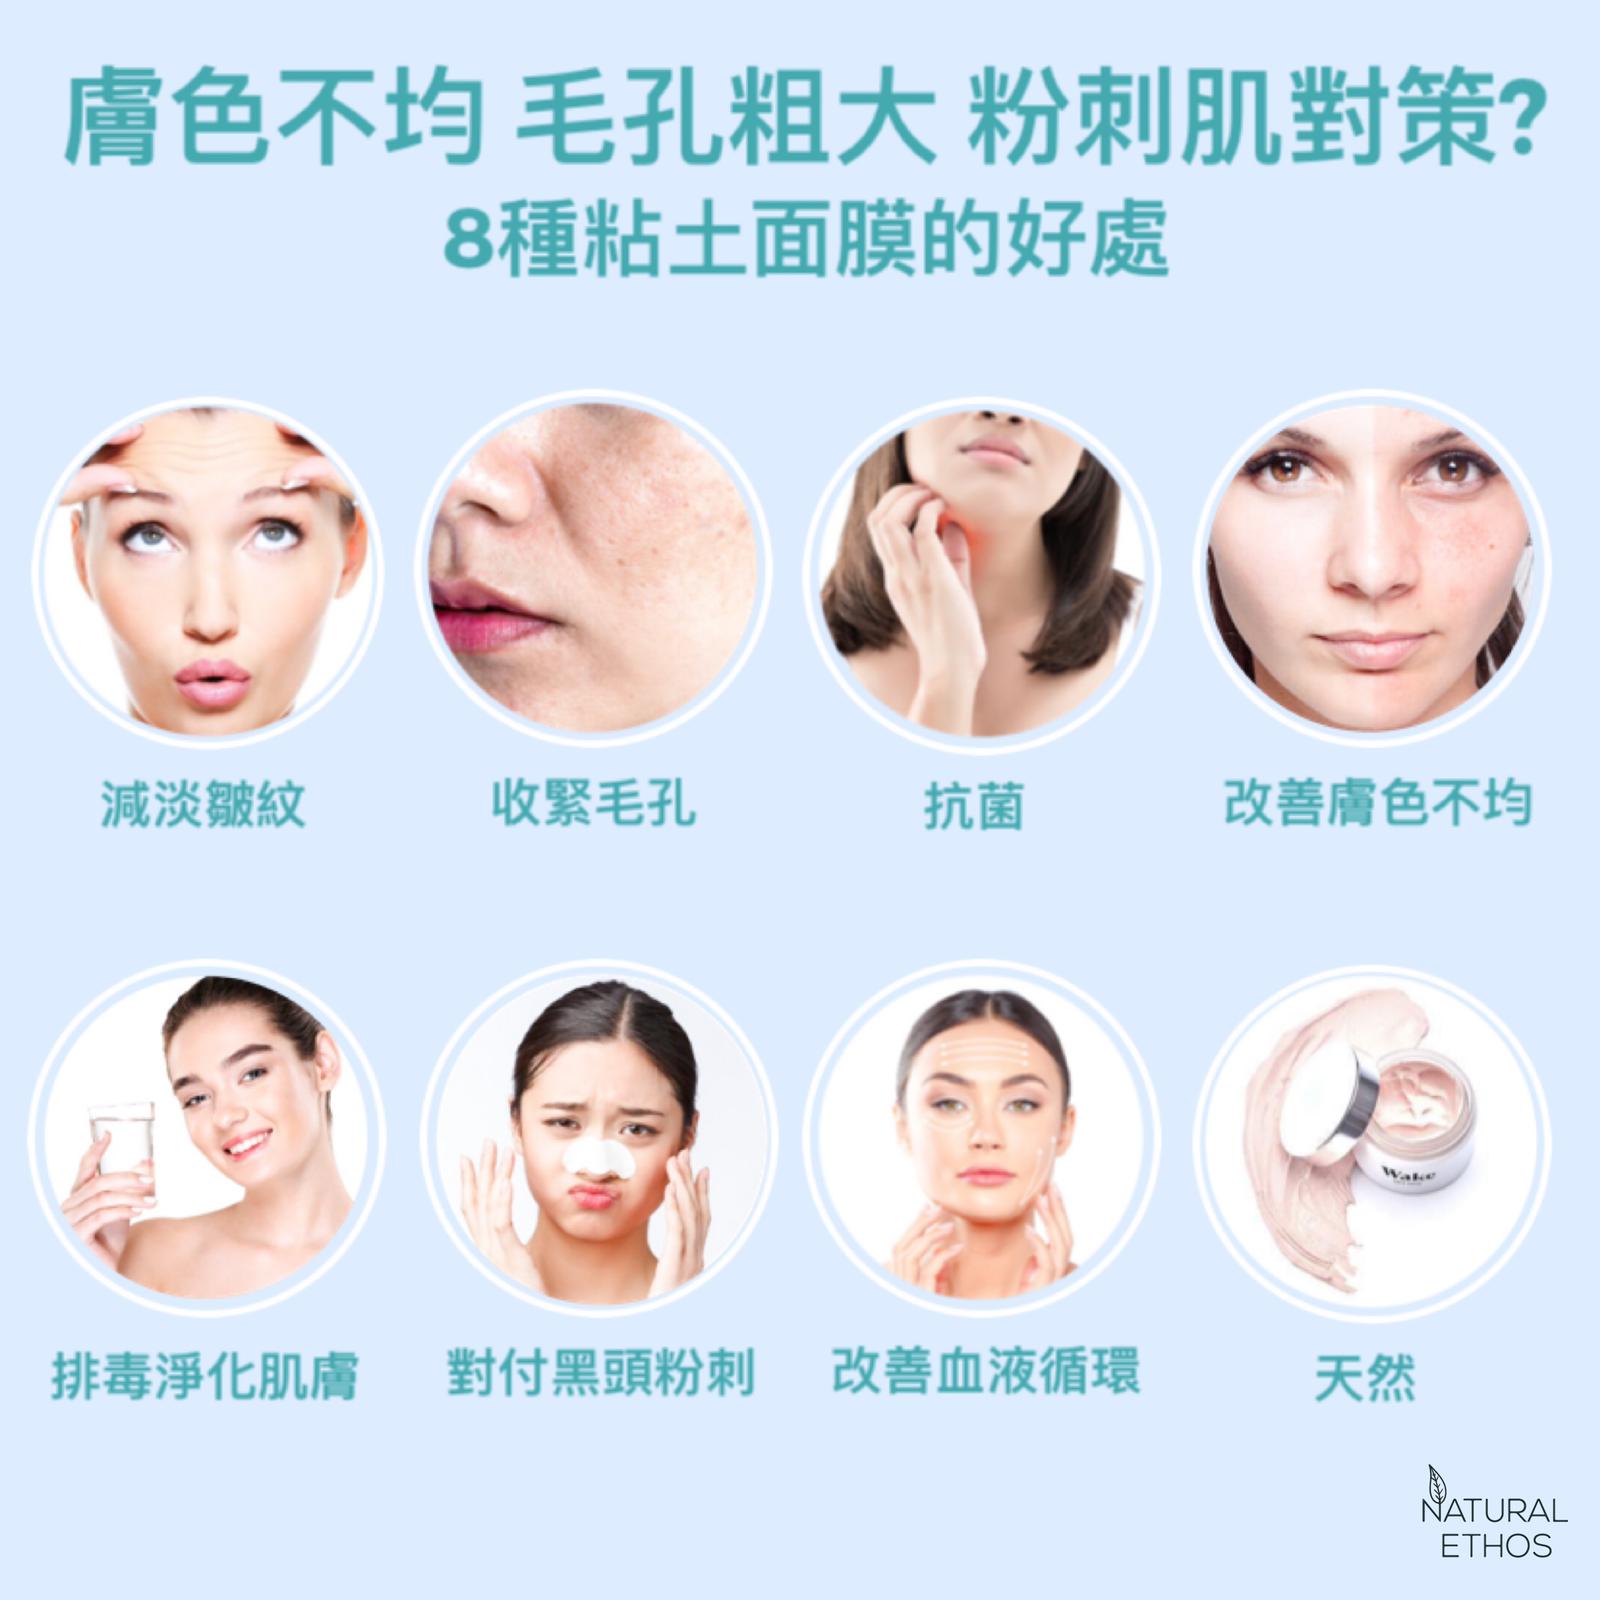 clay face mask skincare wake hk benefits